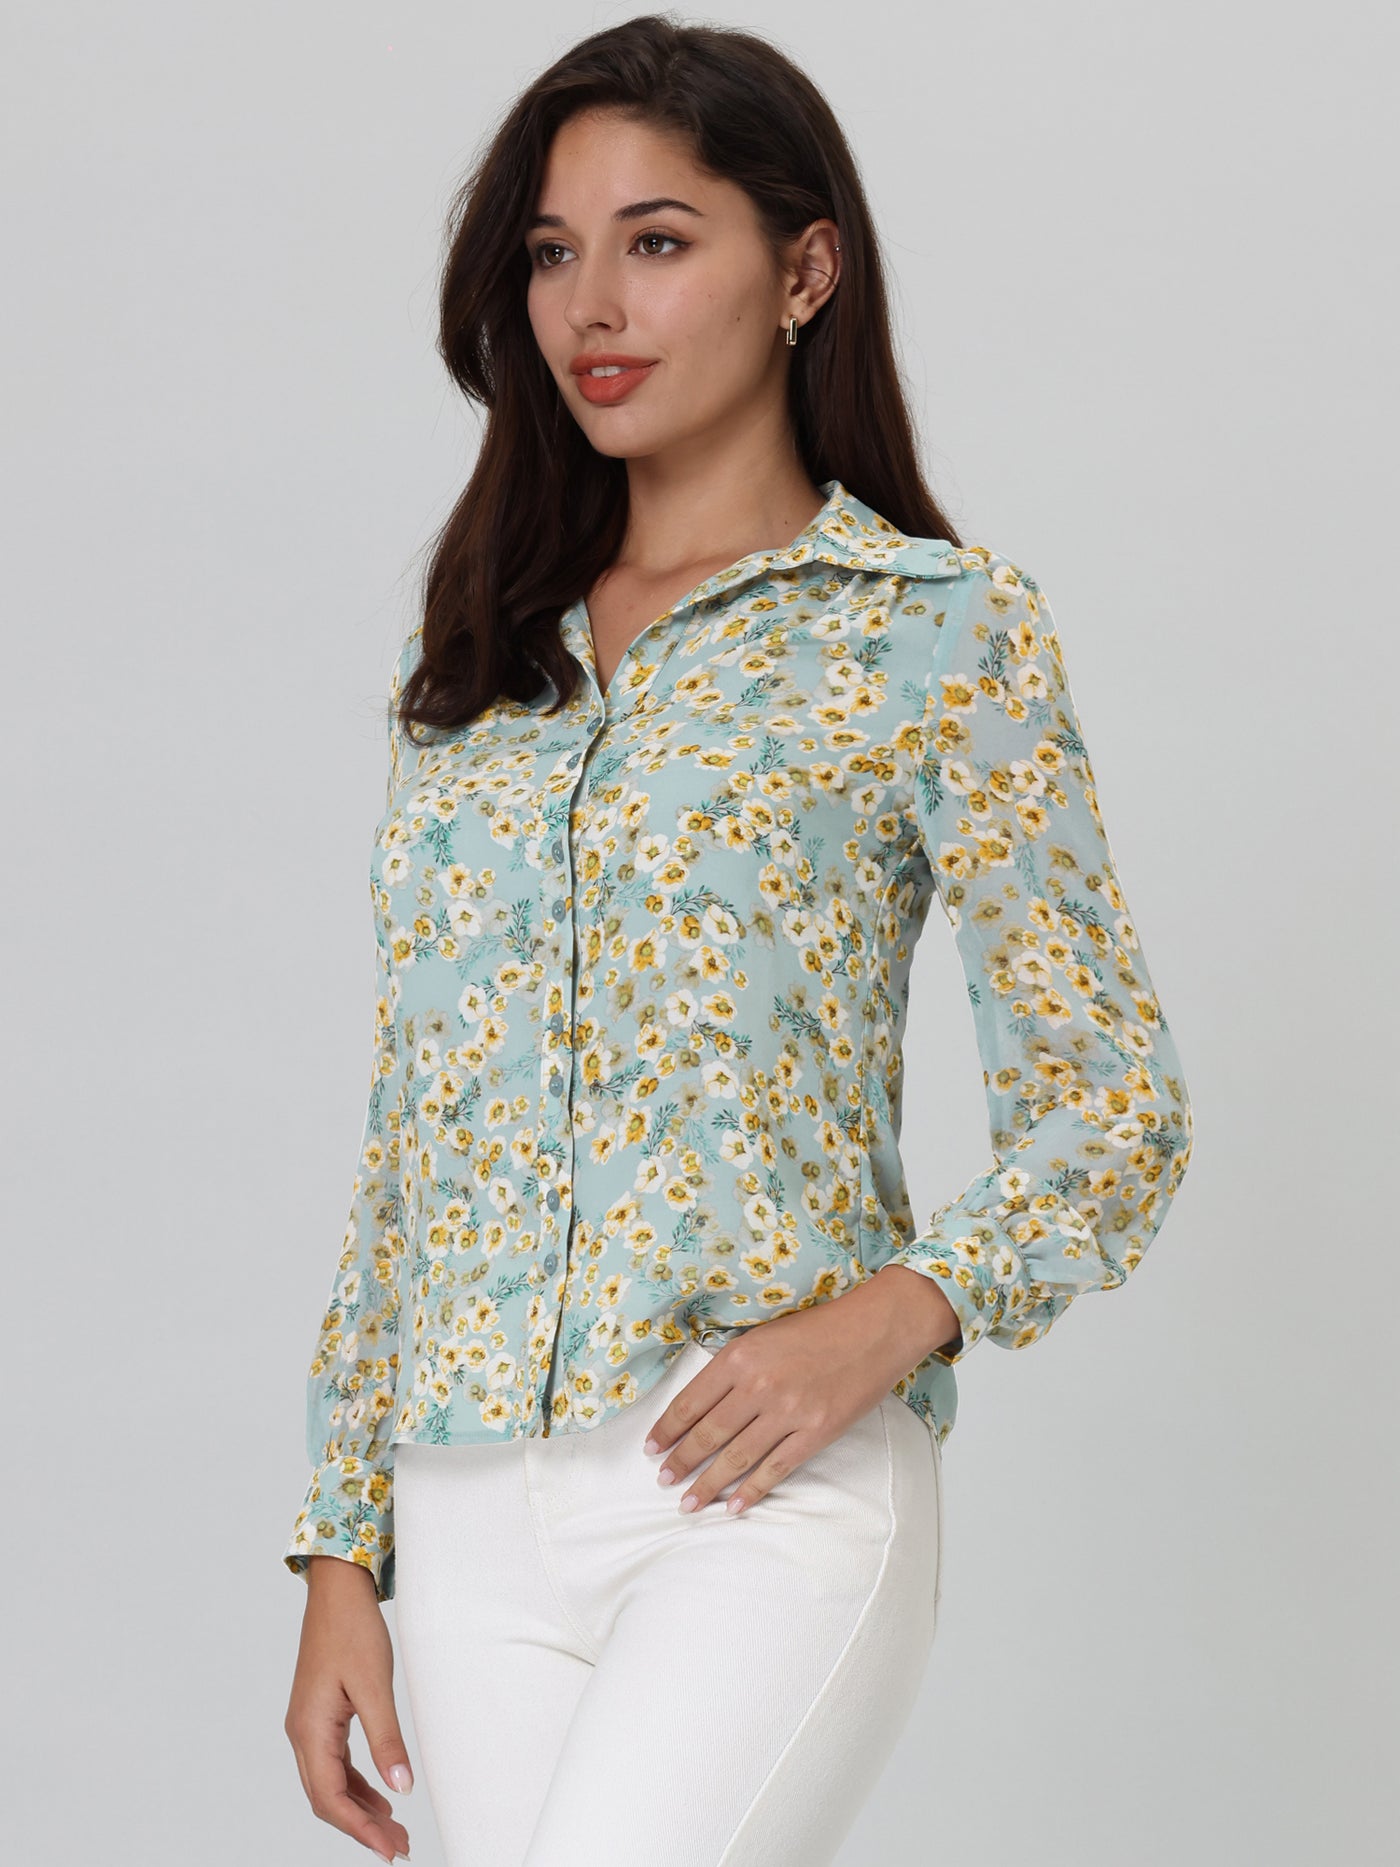 Bublédon Women's Floral Shirt Long Sleeve Button Down Blouse